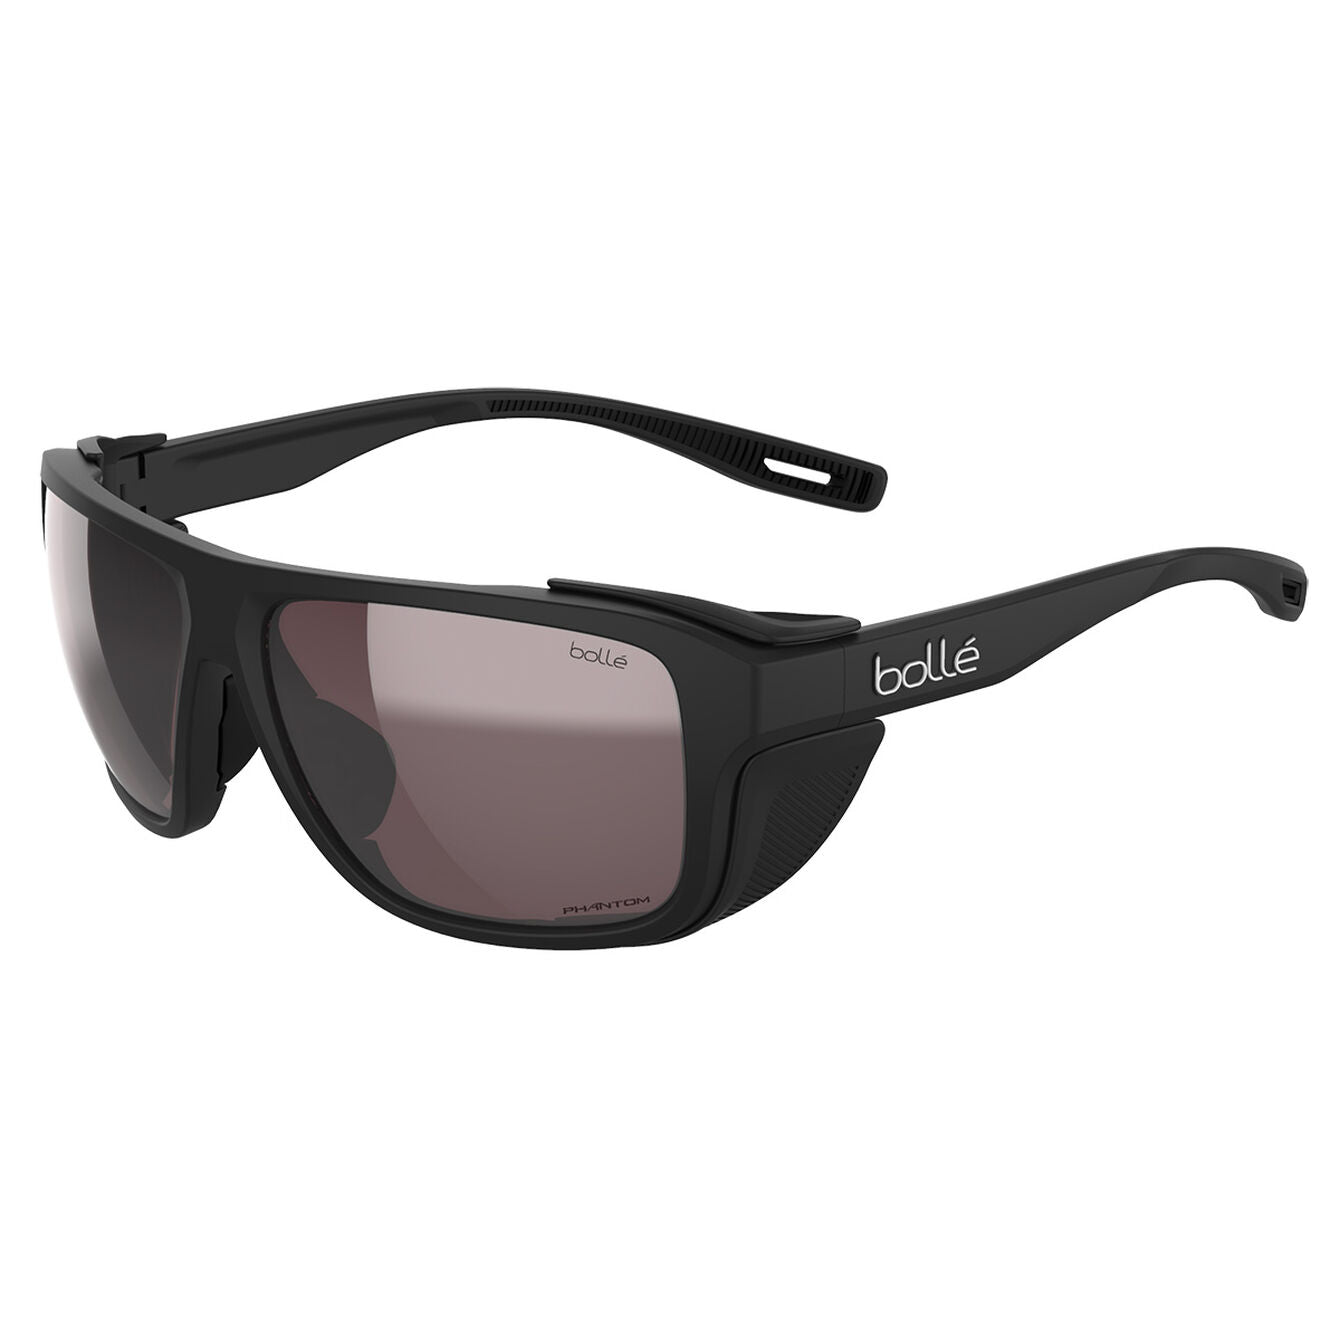 Bolle Pathfinder Photochromic Sunglasses